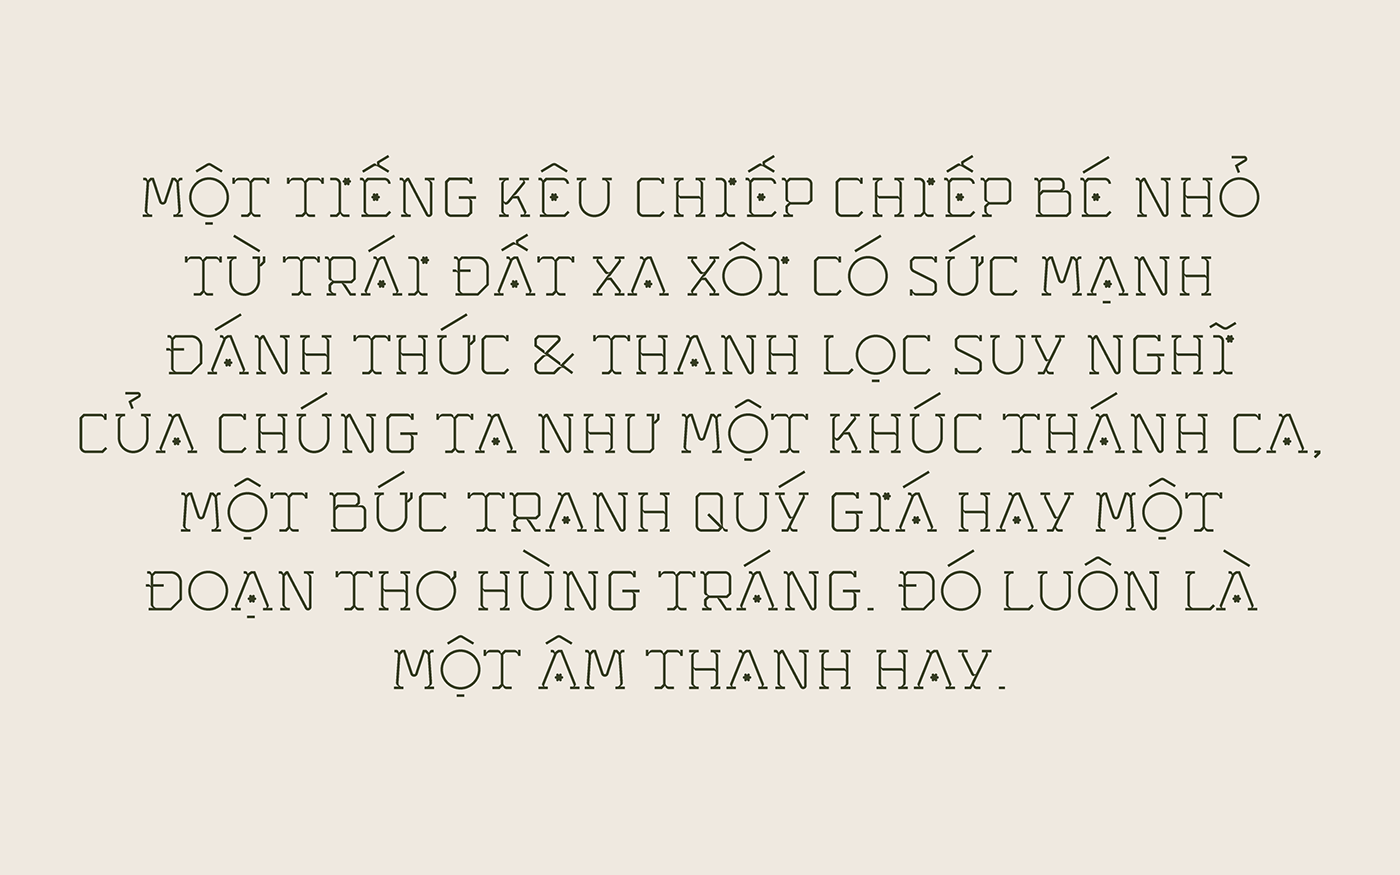 ben datdo Display font geometric sans serif traditional vietnam Window